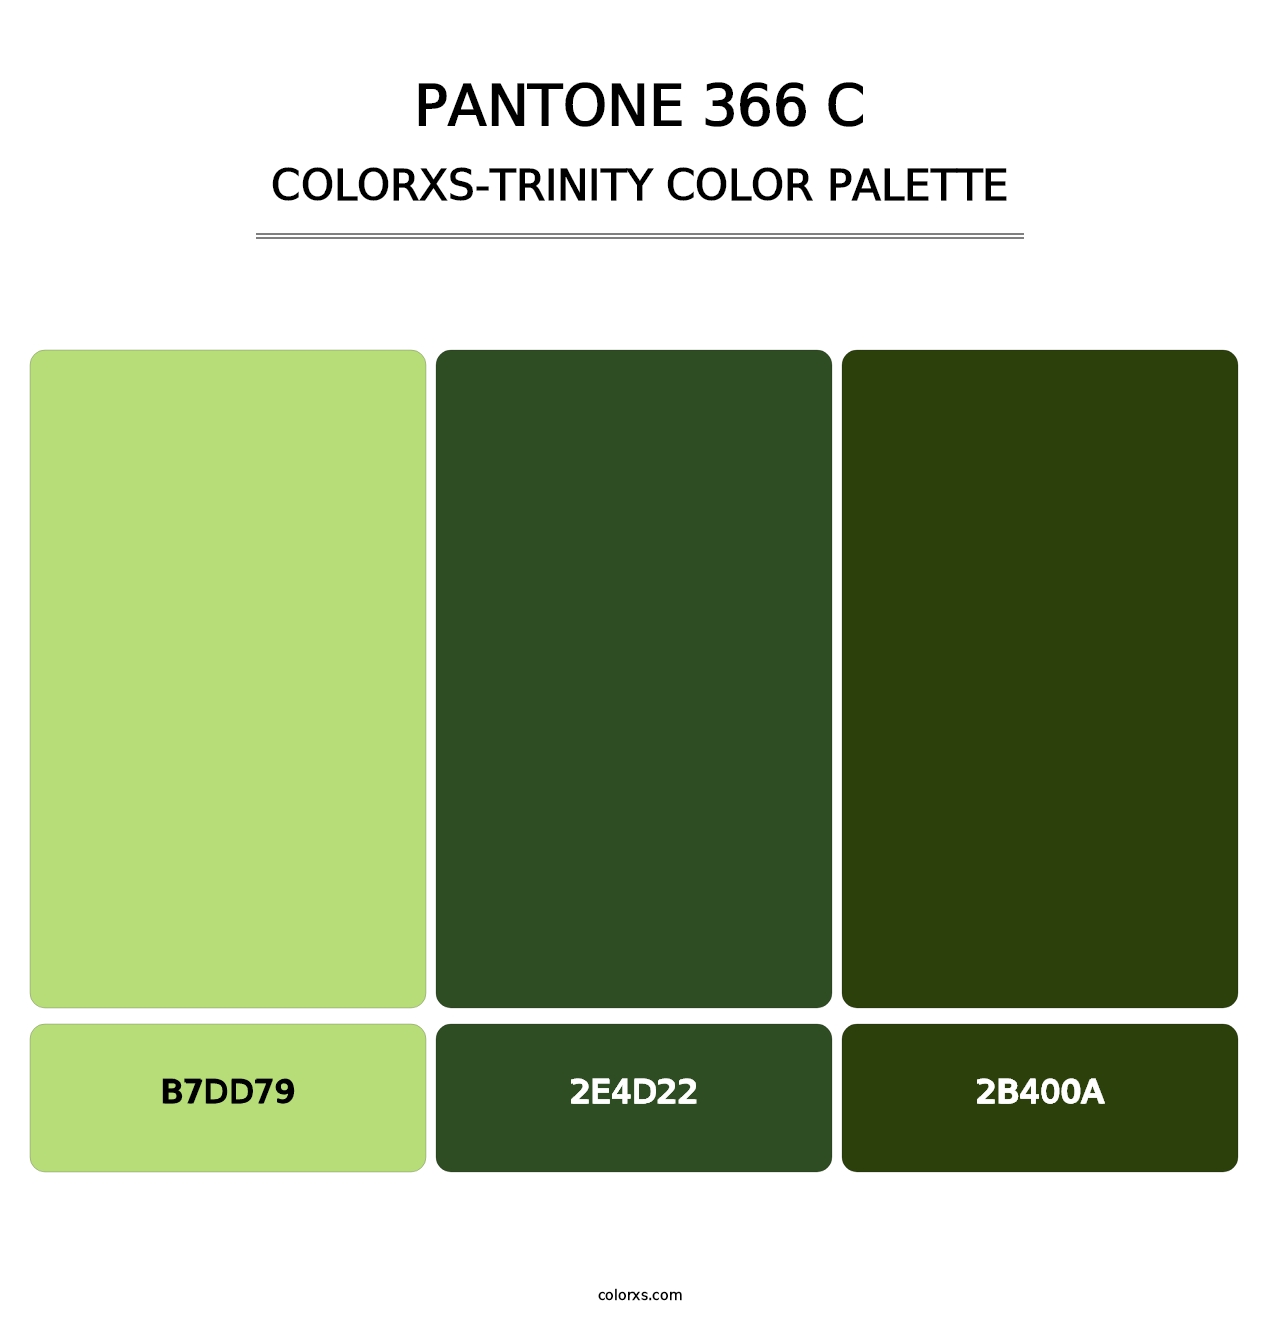 PANTONE 366 C - Colorxs Trinity Palette